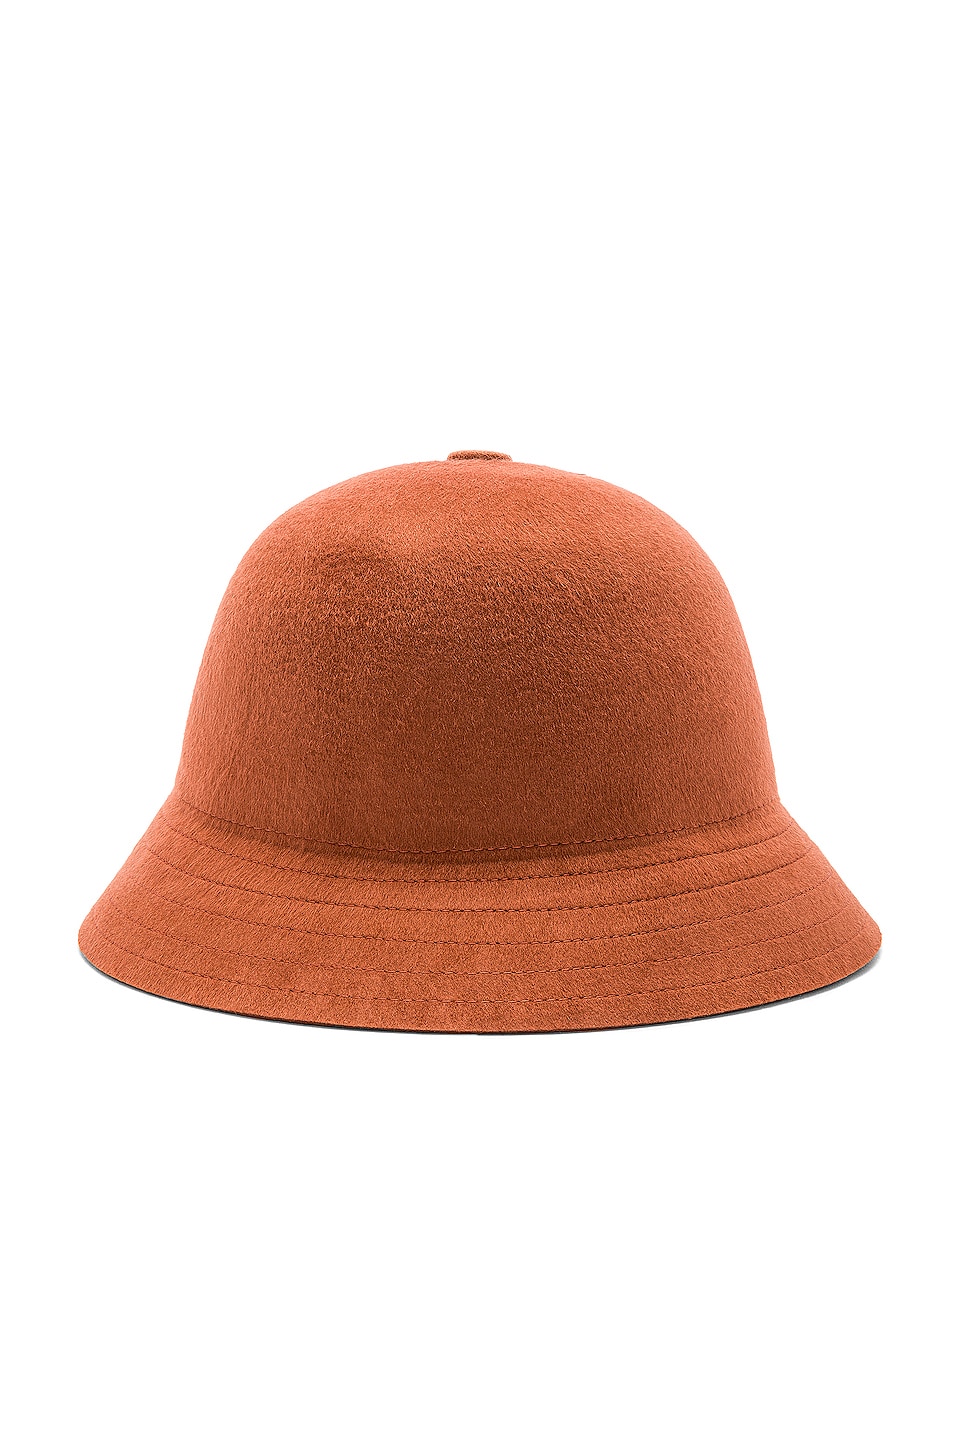 Brixton Essex Bucket Hat in Rust | REVOLVE